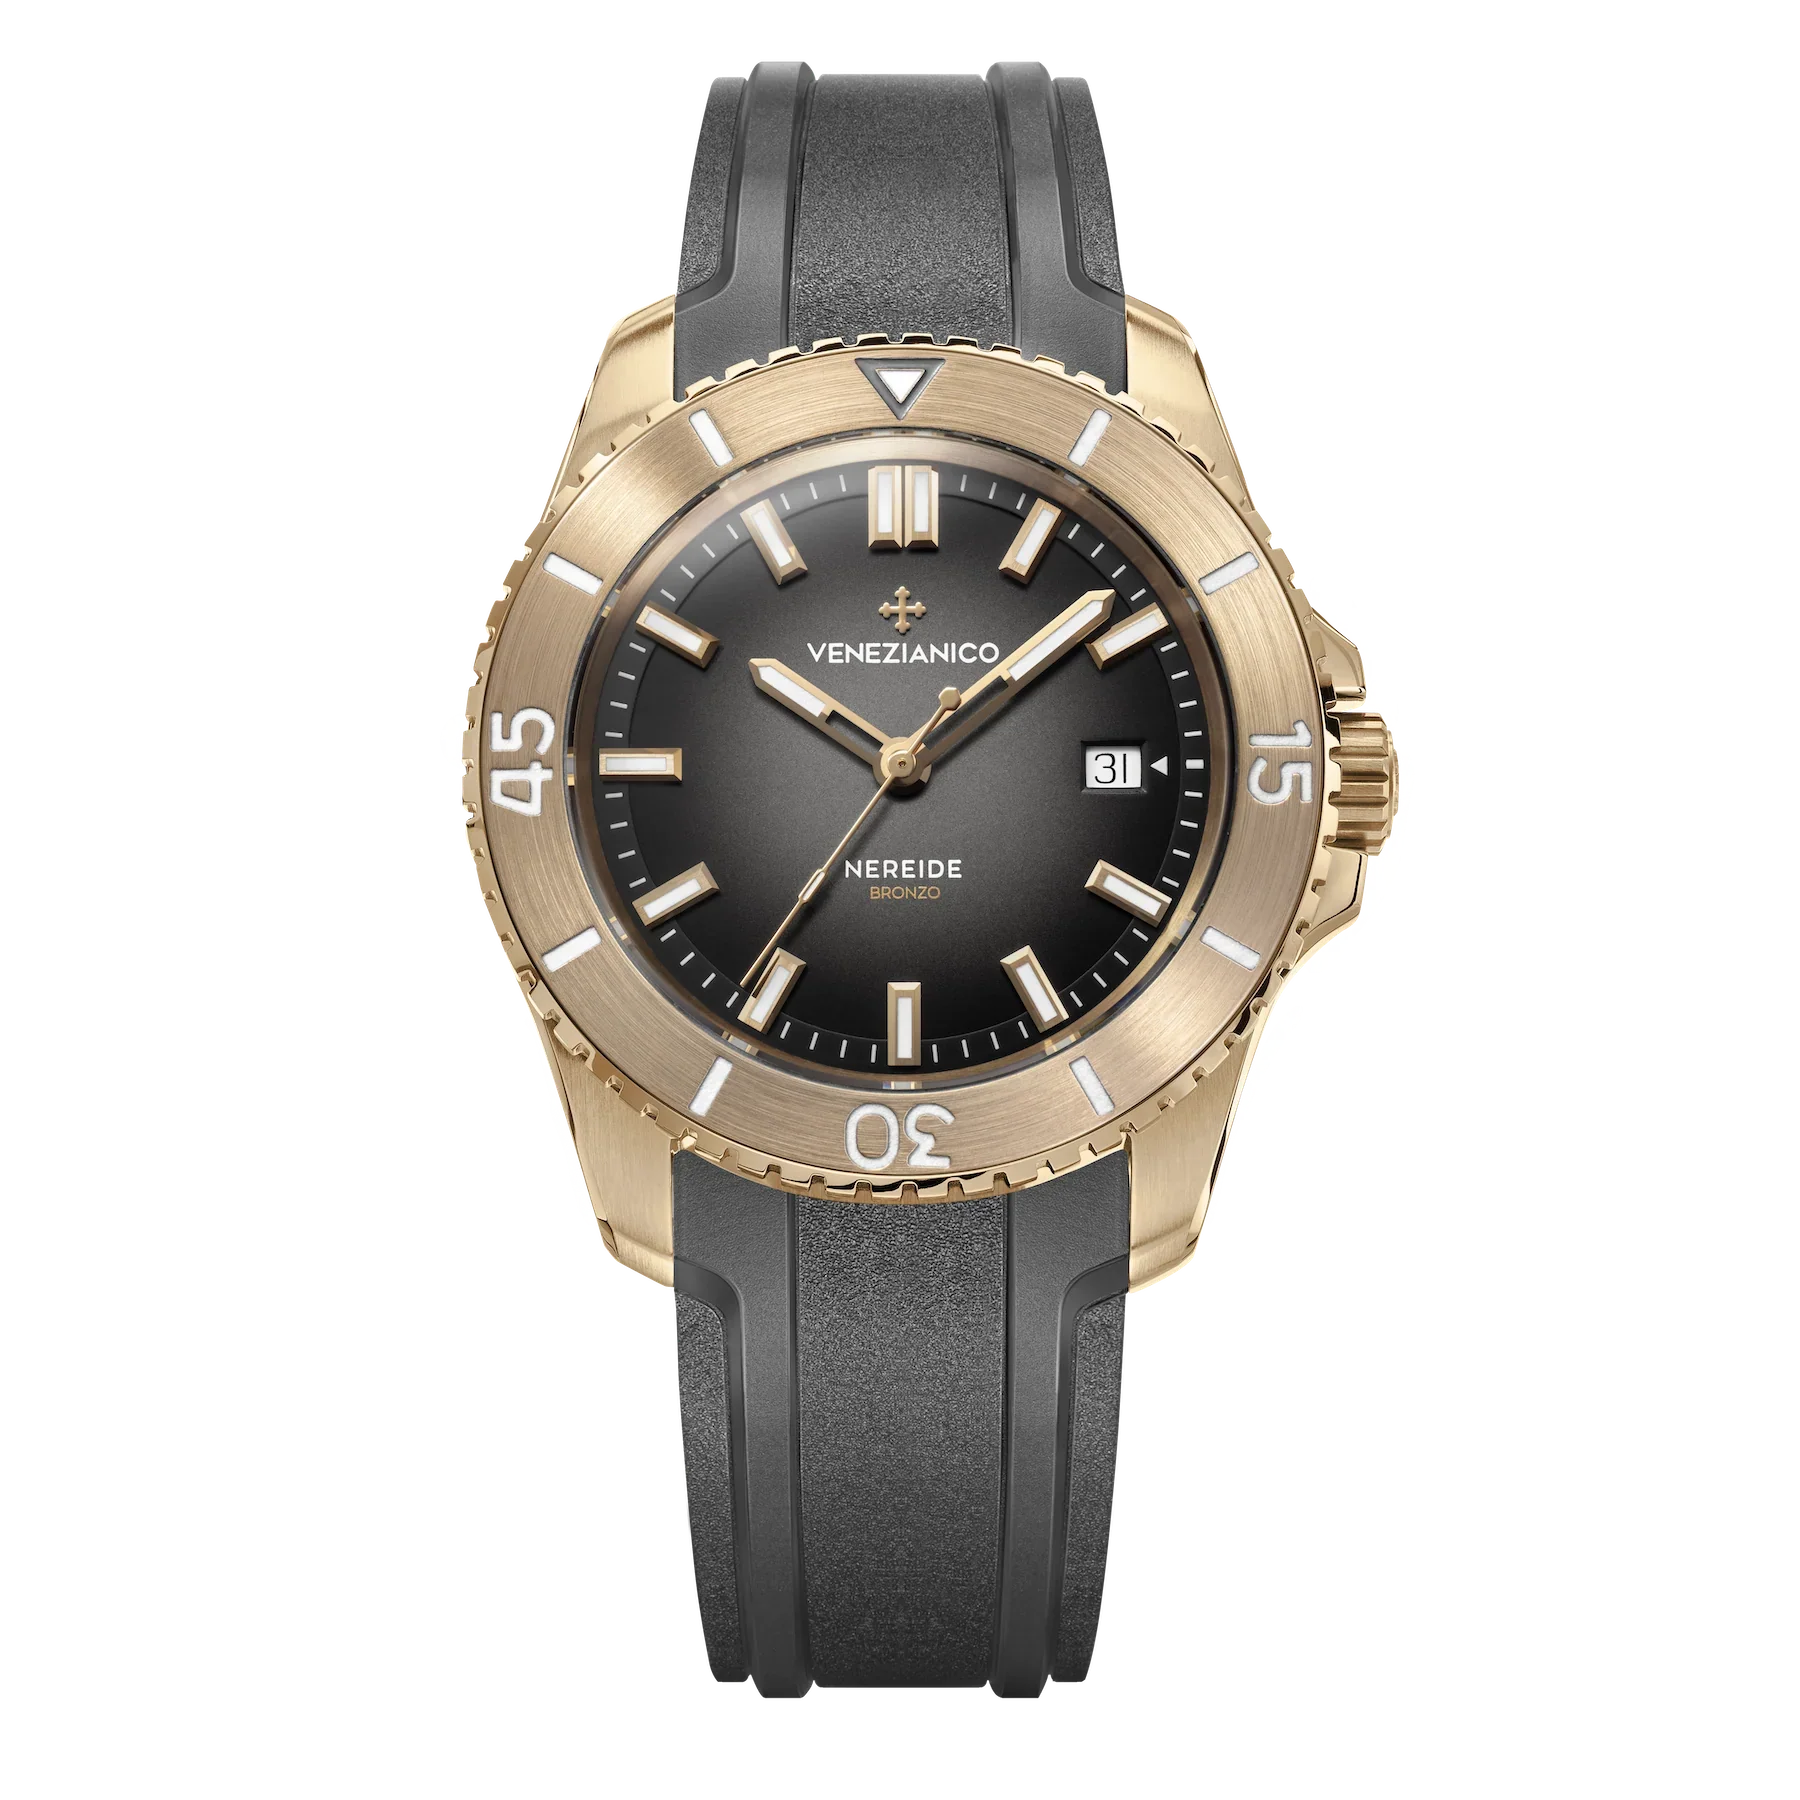 Venezianico Nereide Bronzo Men's Gold Grey Watch 4521555